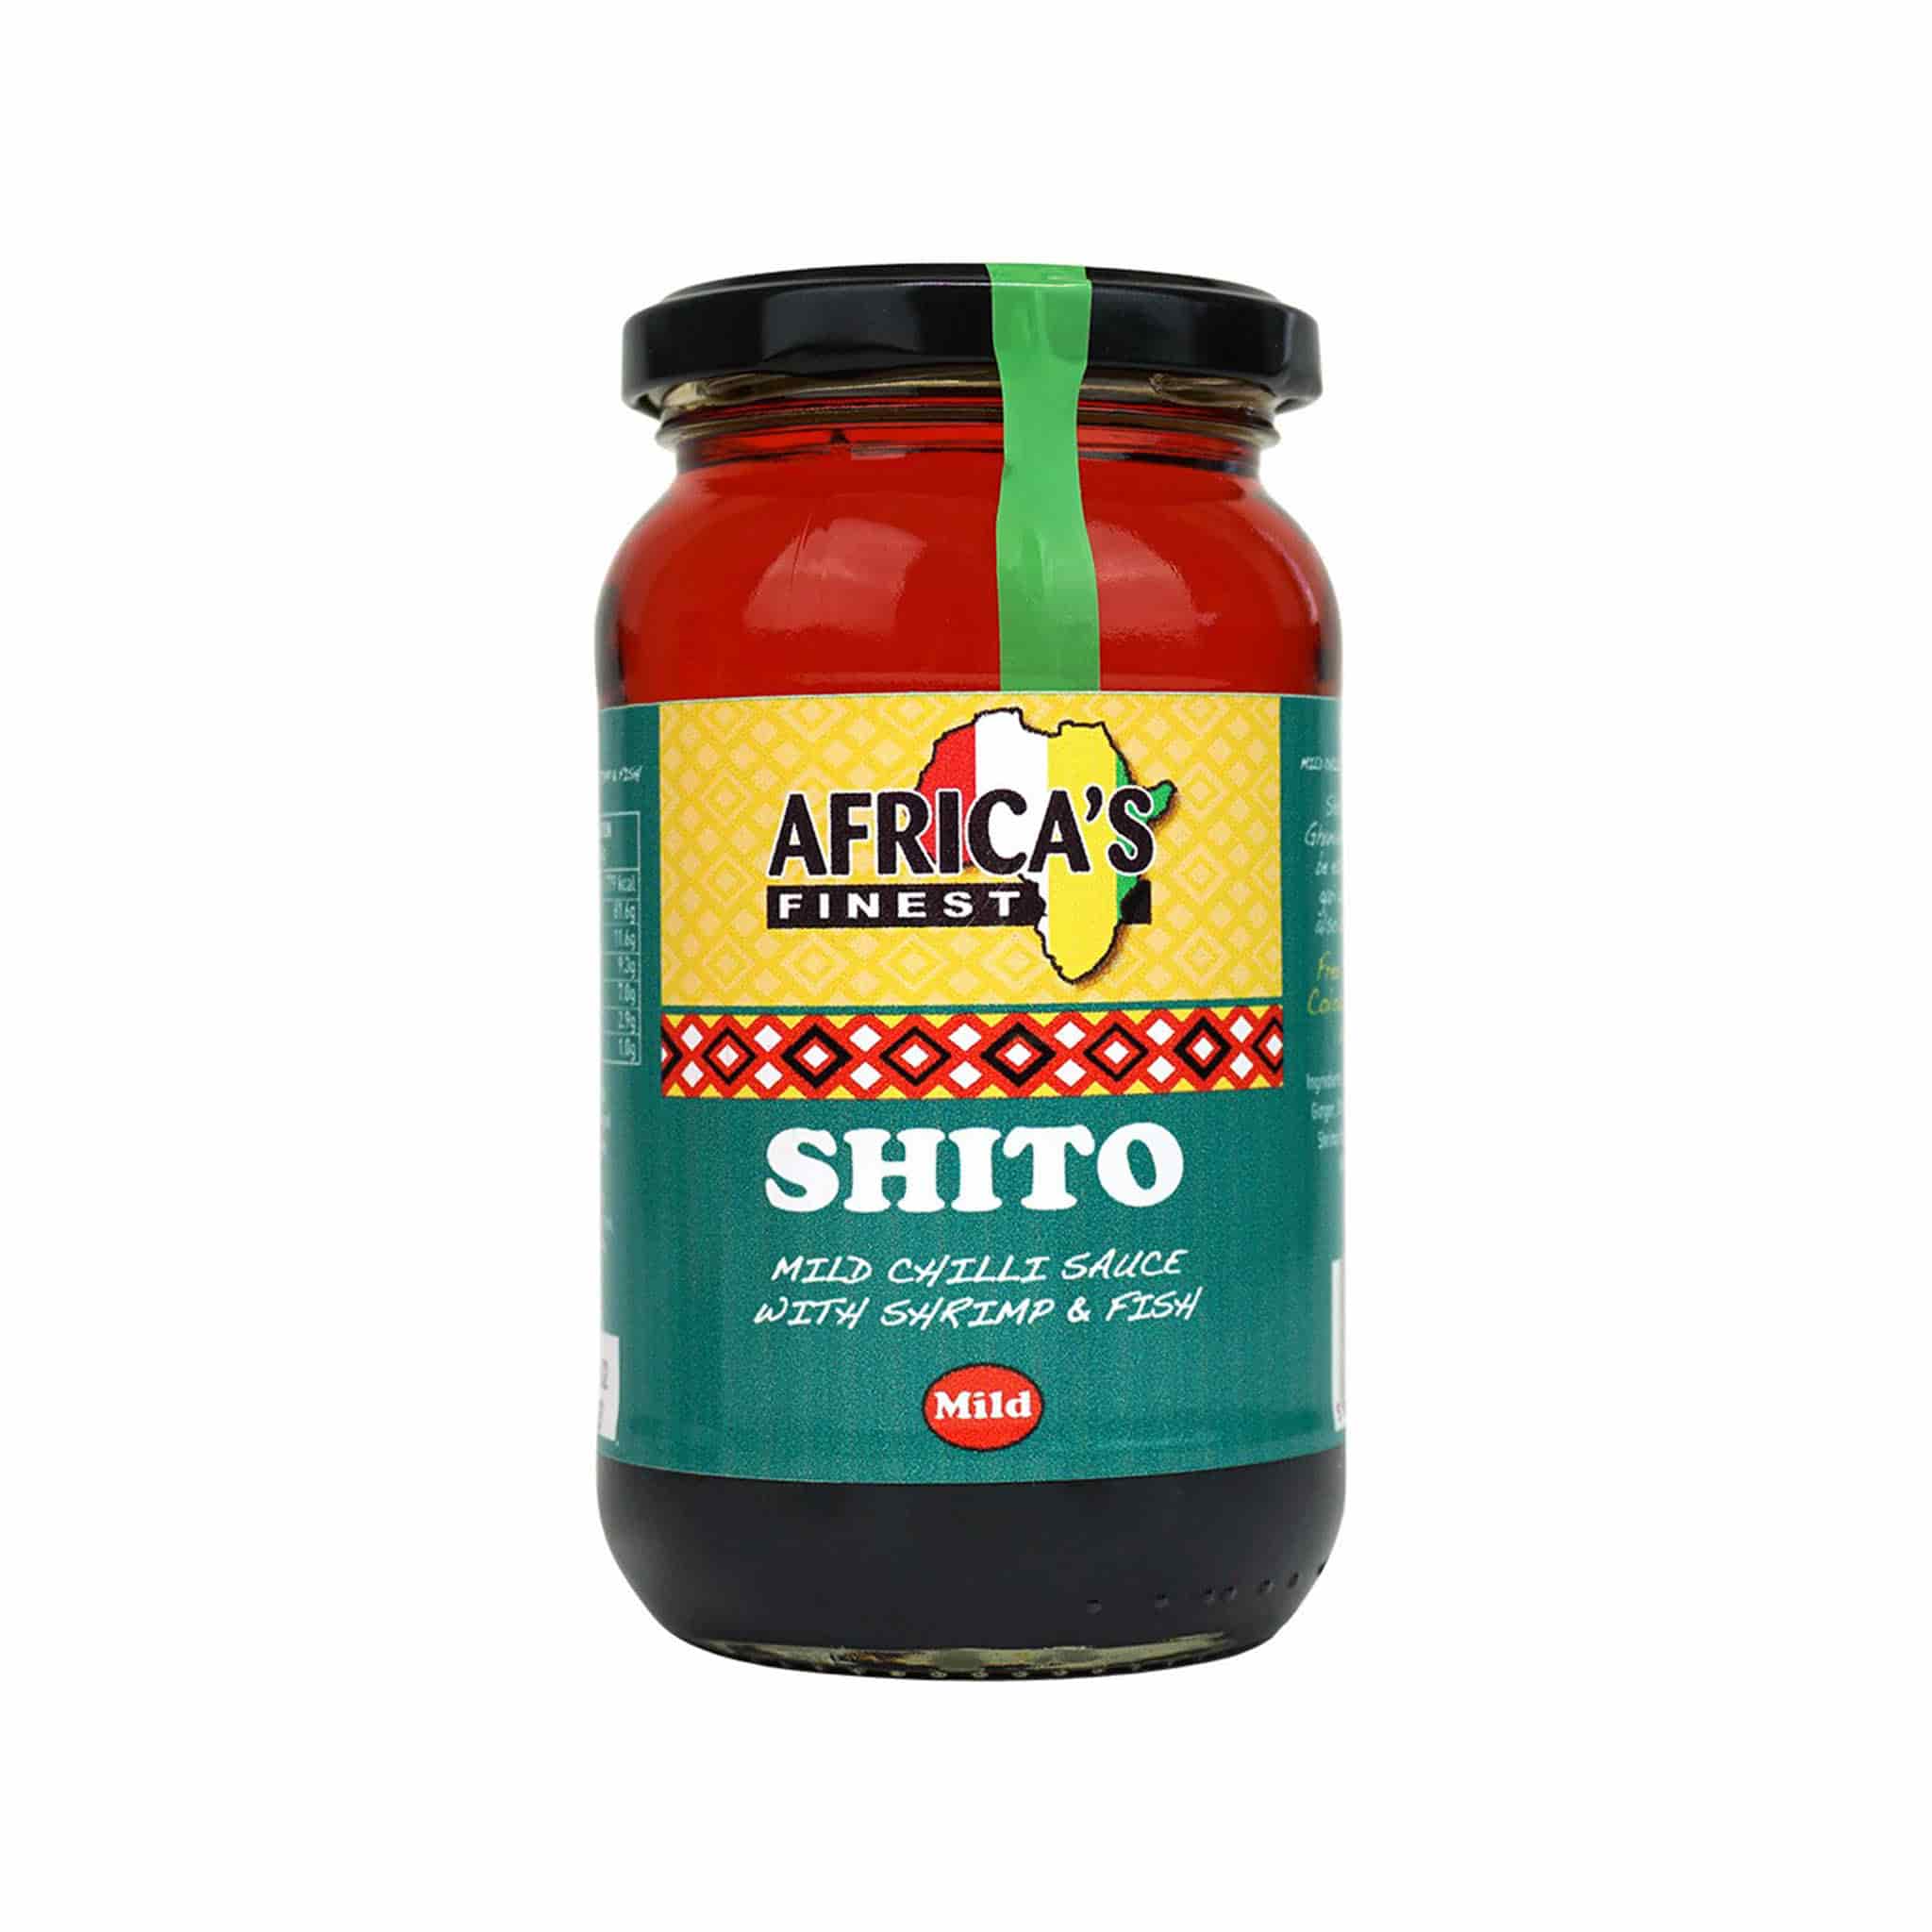 Ghana Best Shito Mild Chilli Sauce 160G - Tesco Groceries